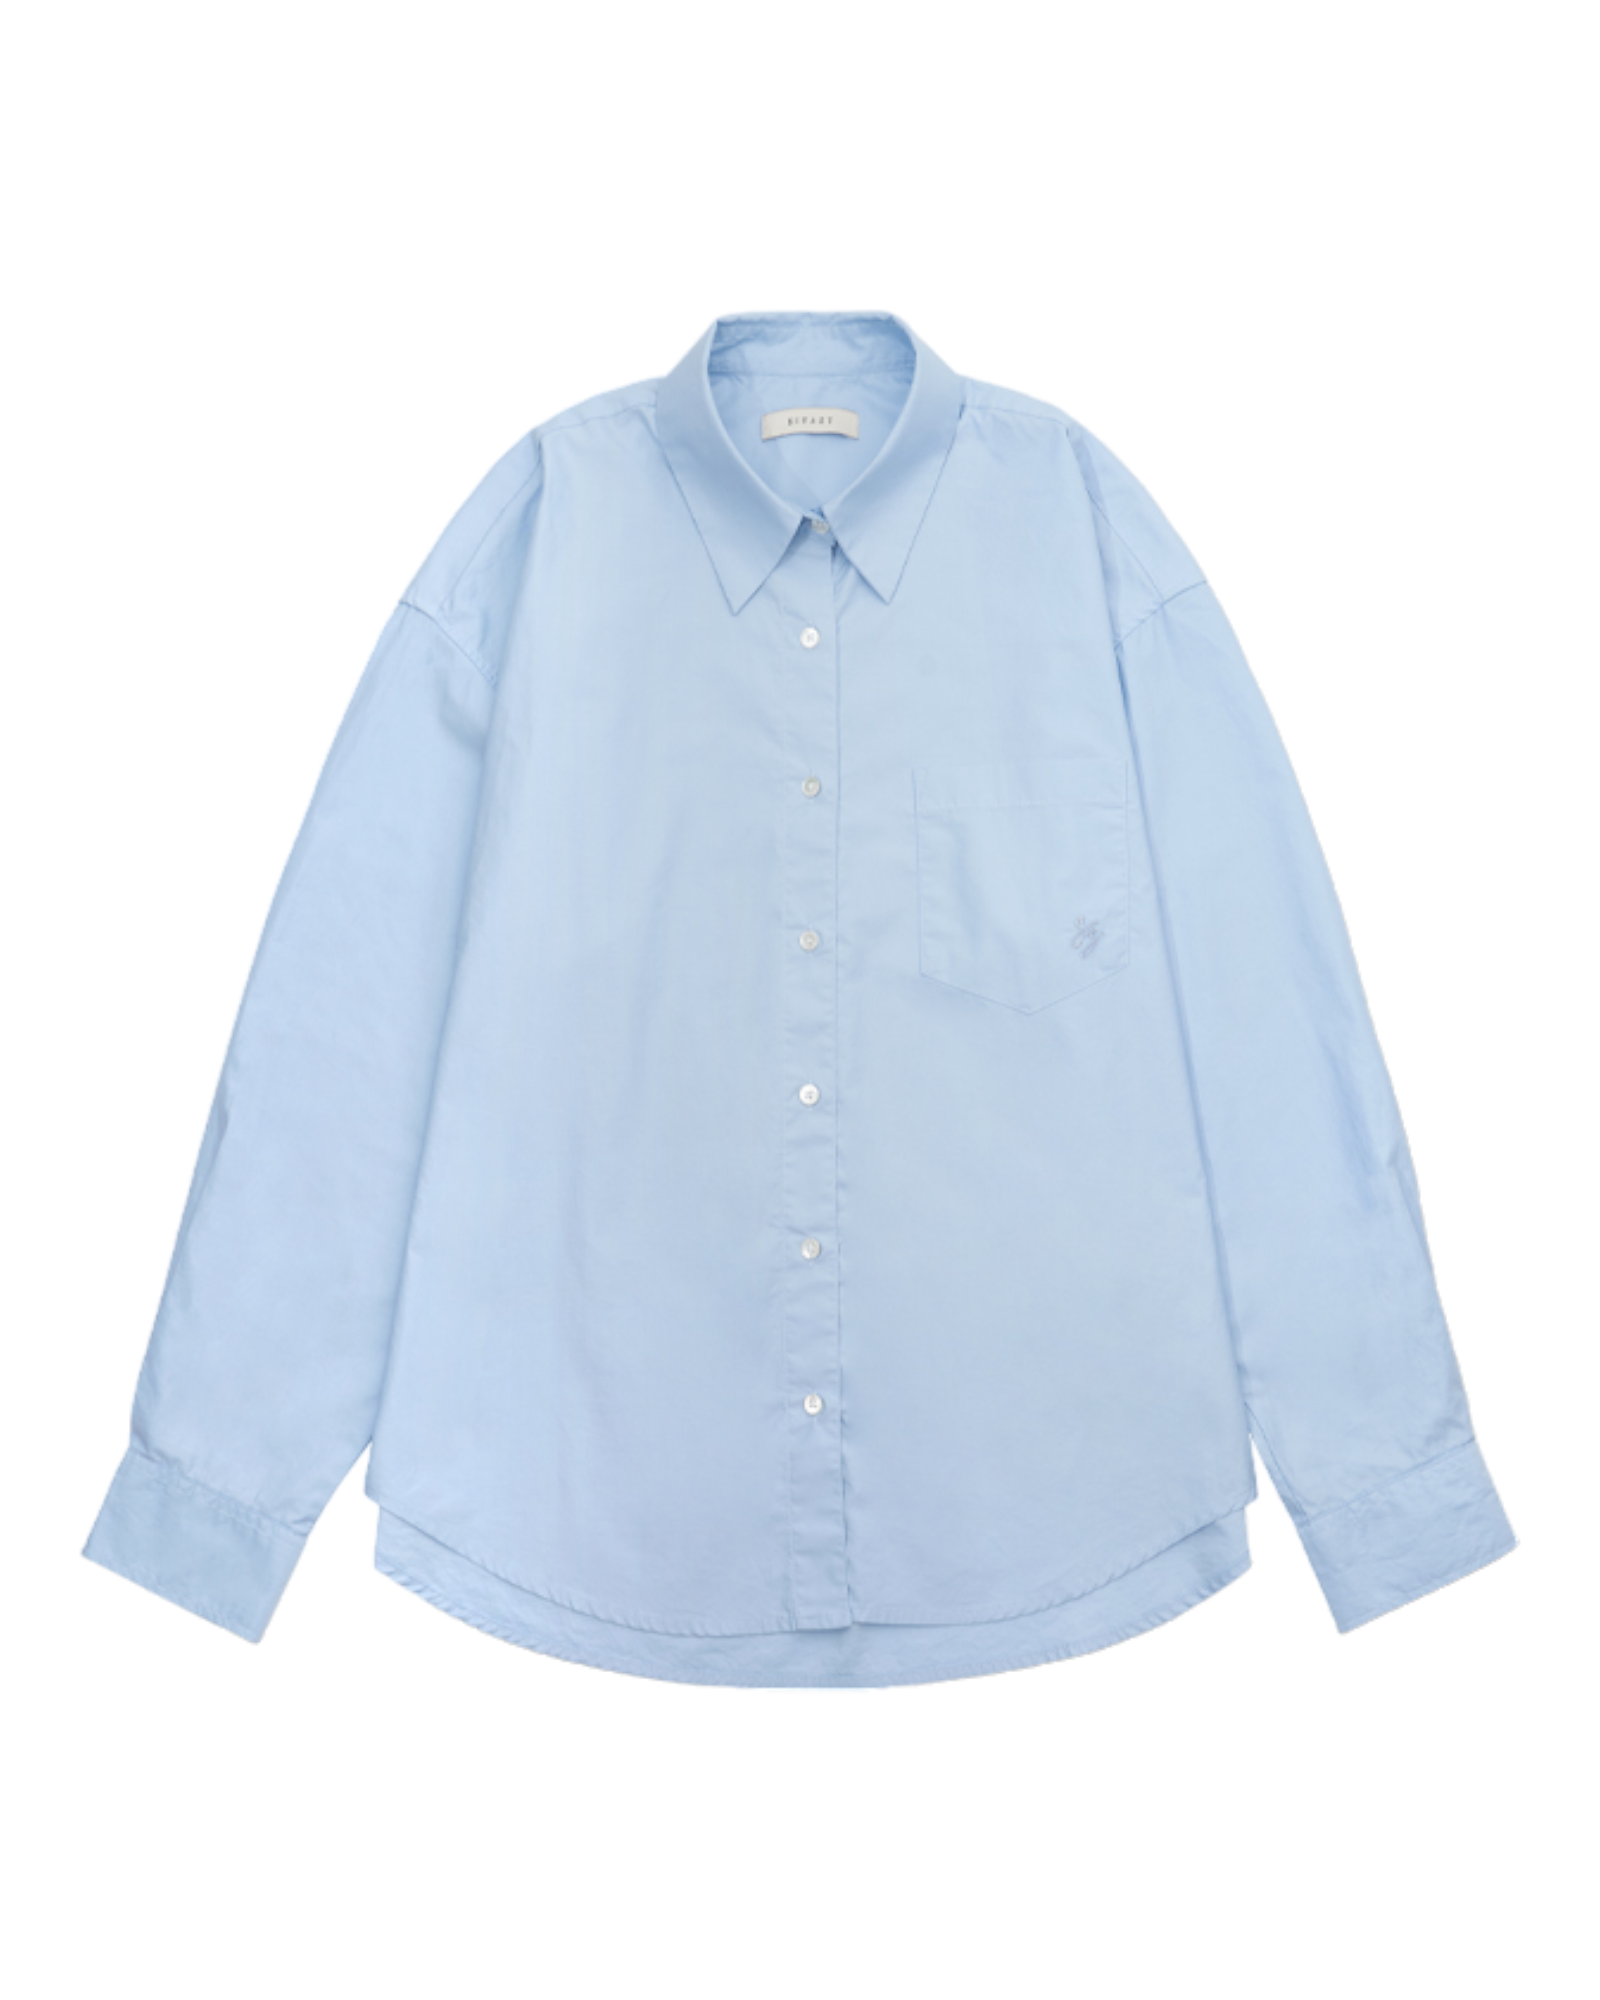 Overfit Silky Cotton Shirt In Light Blue